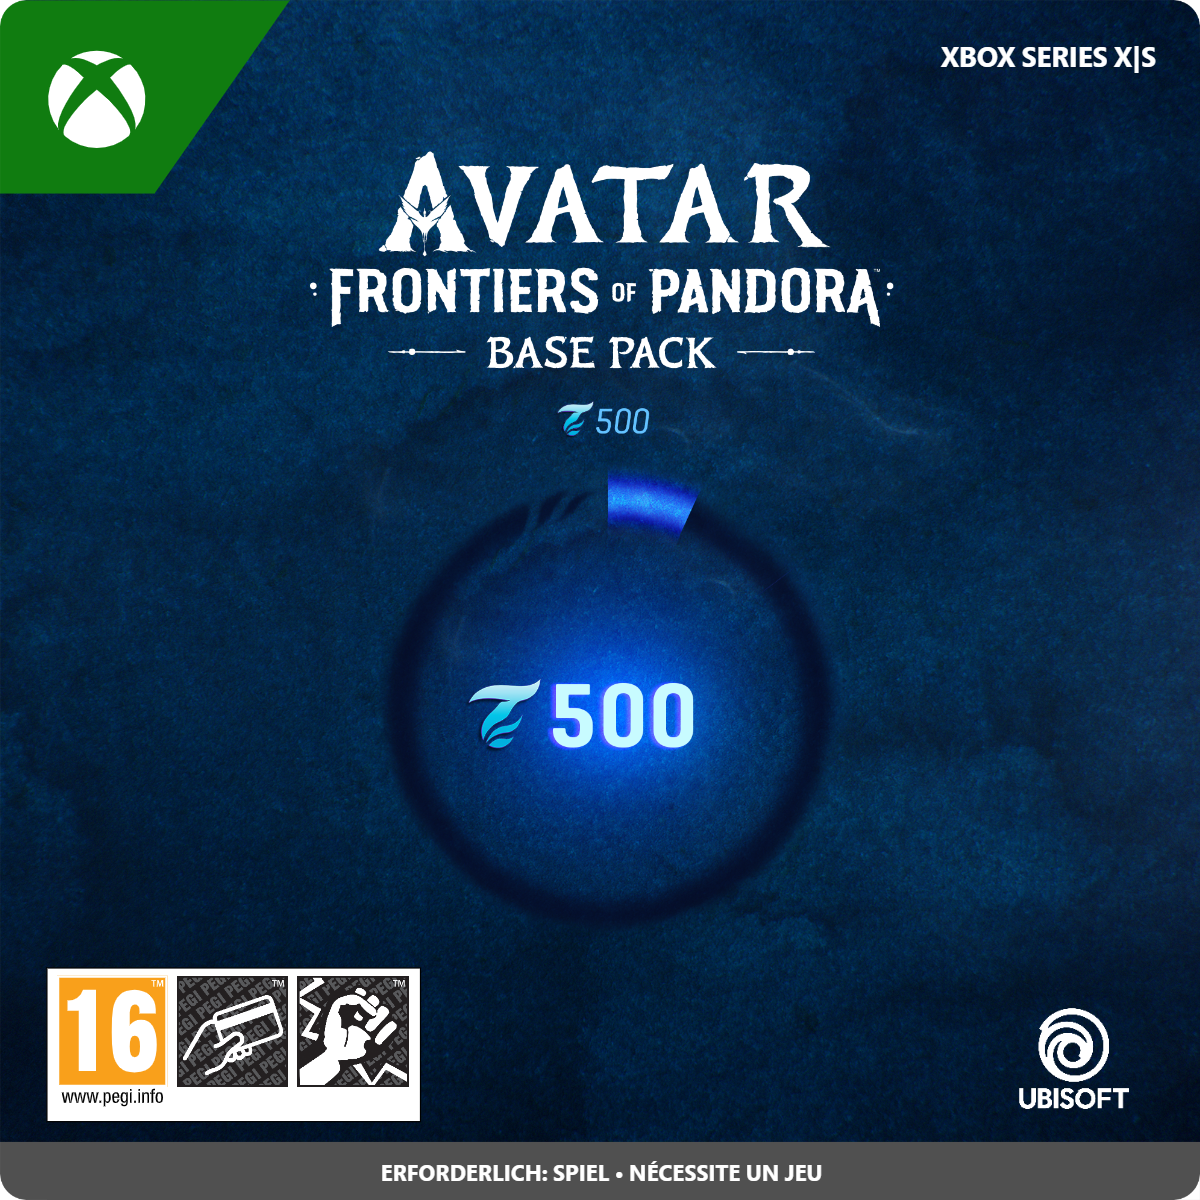 Xbox Avatar Frontiers of Pandora VC Pack 500 Download Code (Xbox) zum Sofortdownload